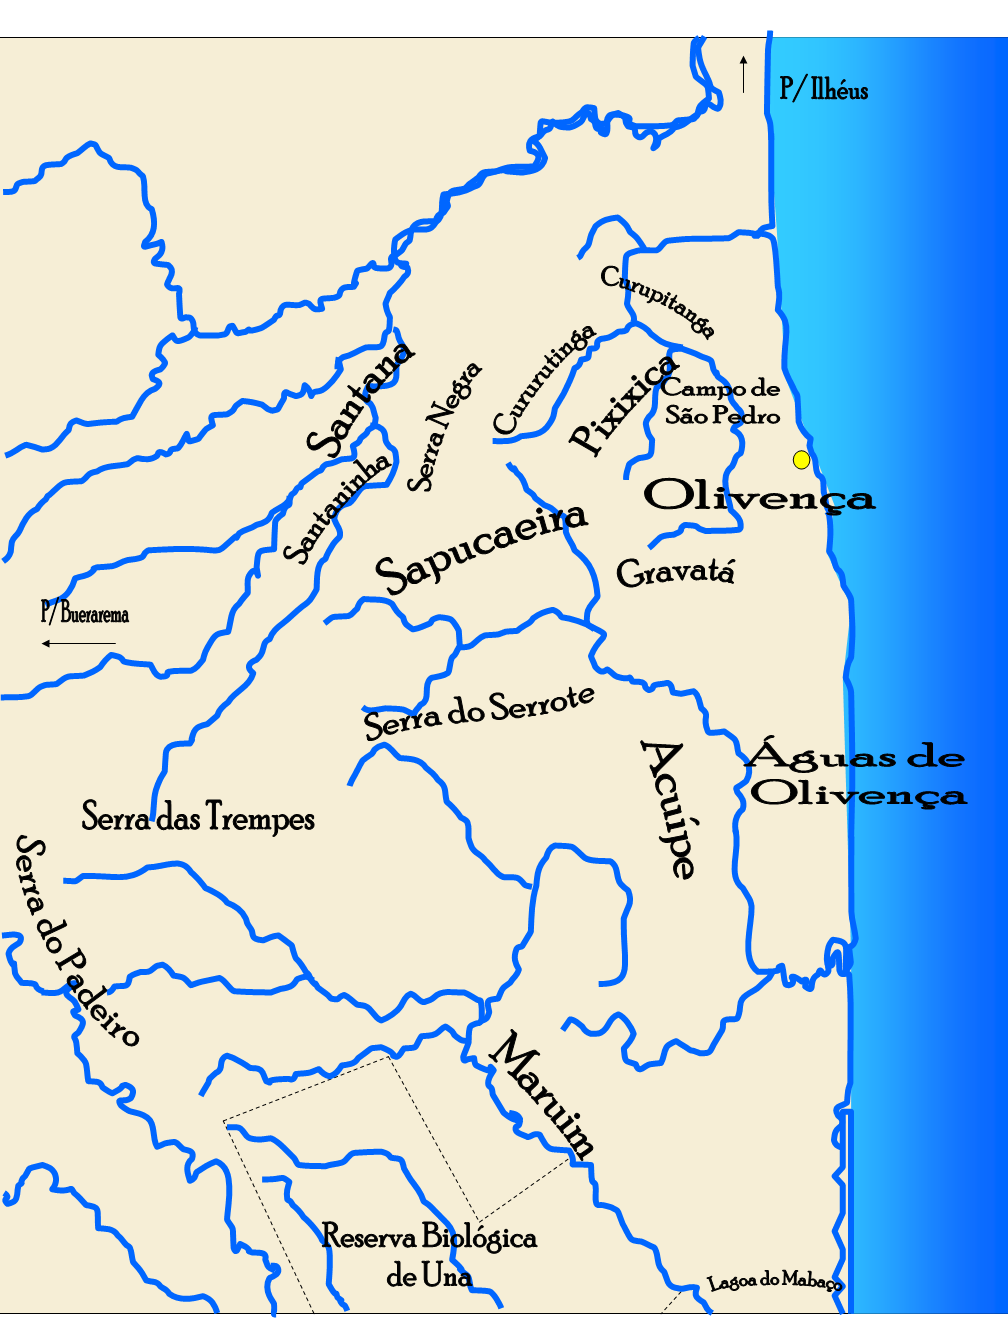 Mapa de Portugal Rios